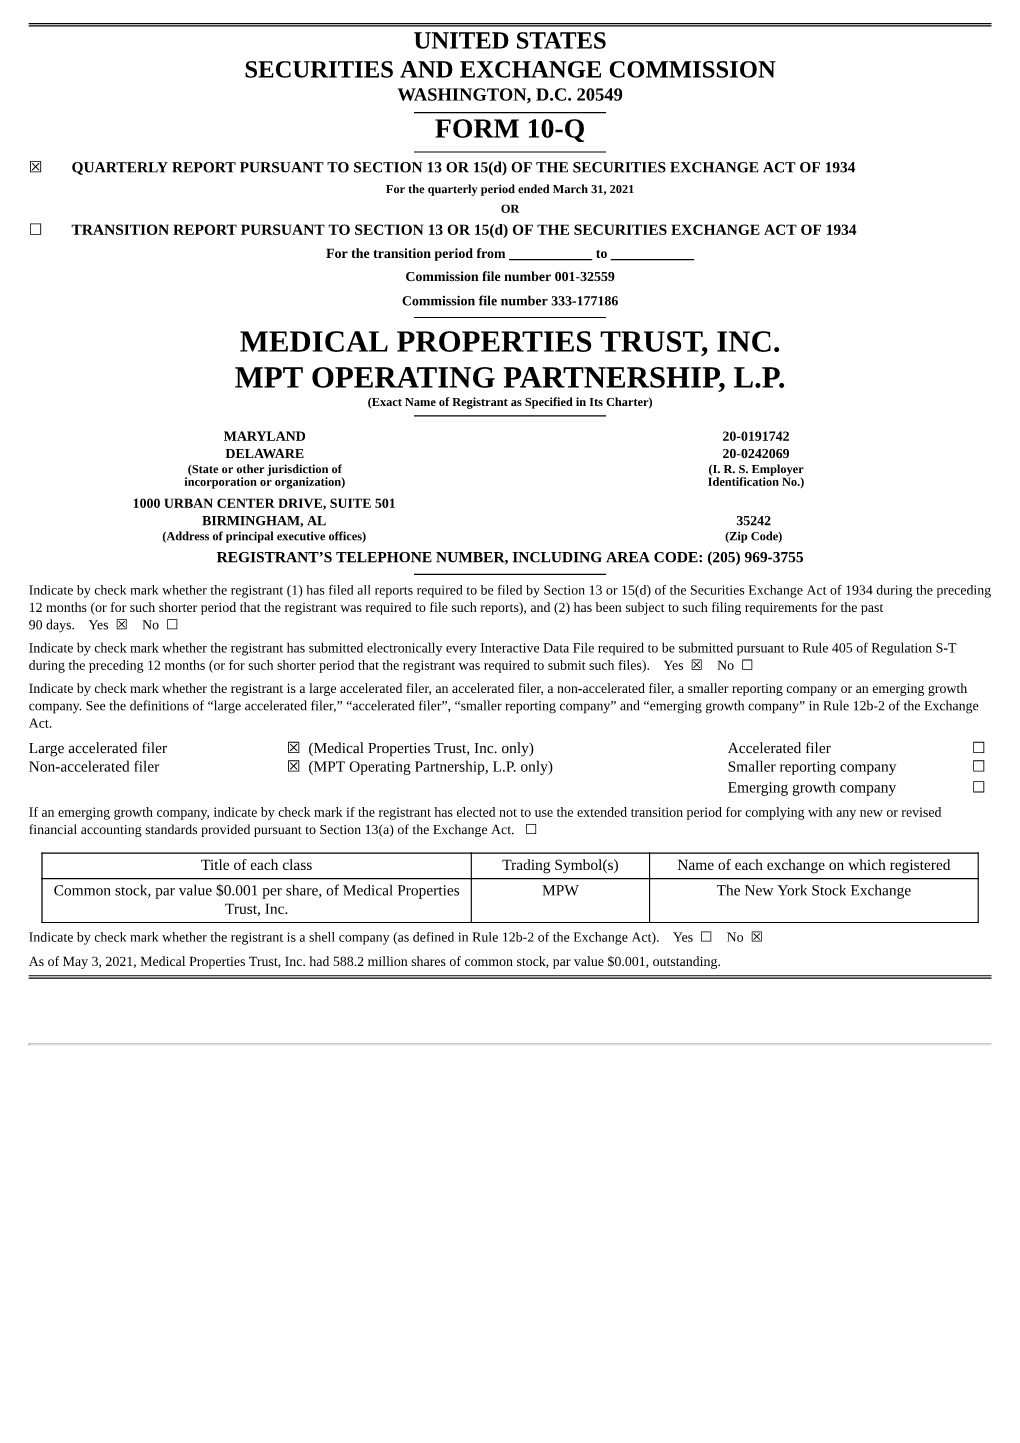 Medical Properties Trust, Inc. Mpt Operating Partnership, L.P